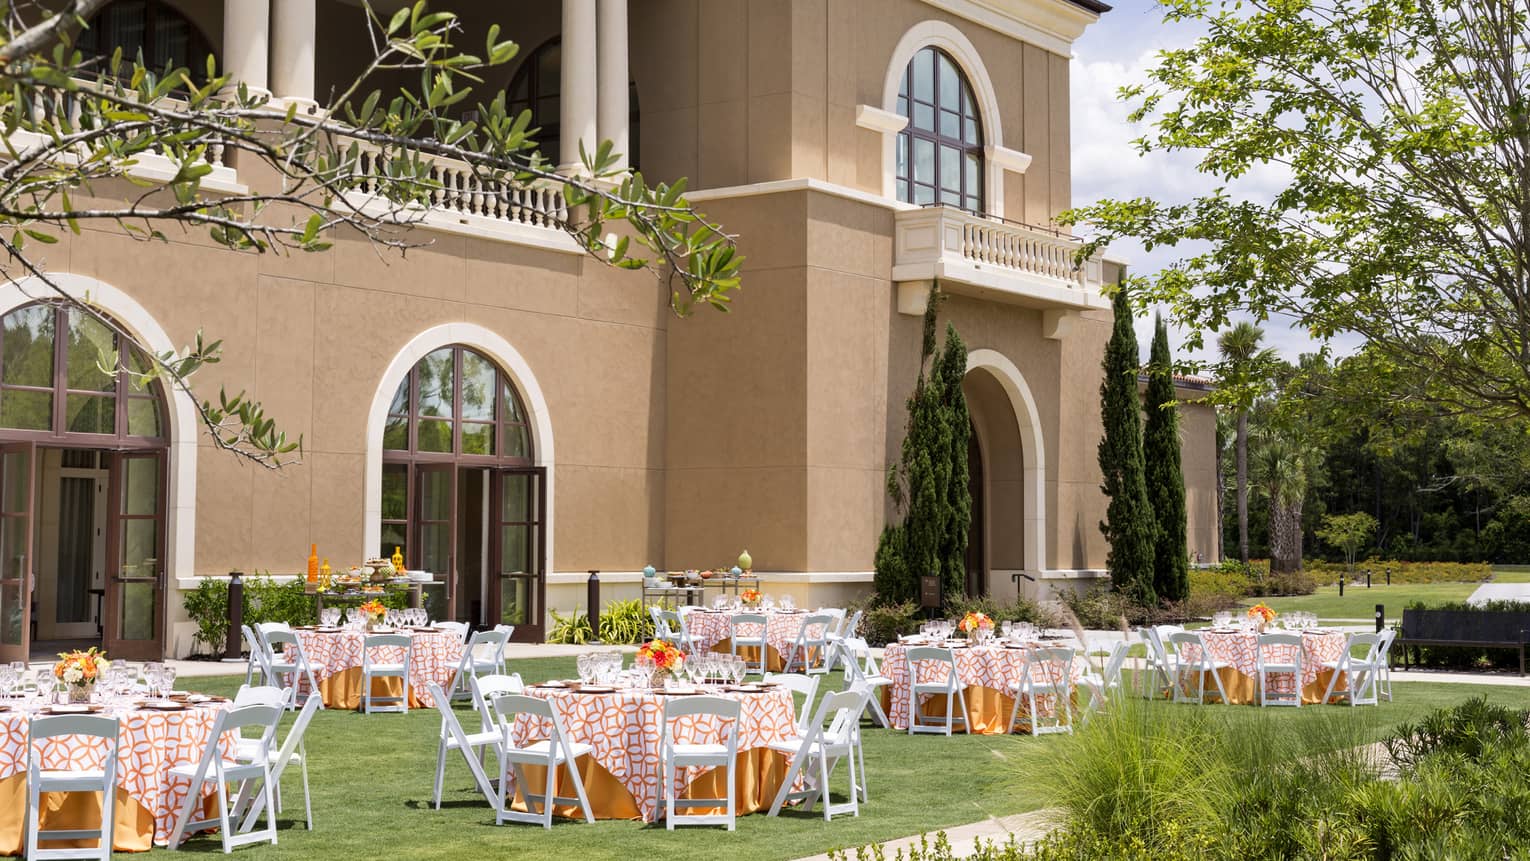 Garden wedding set up, round tables with orange linens, white chairs